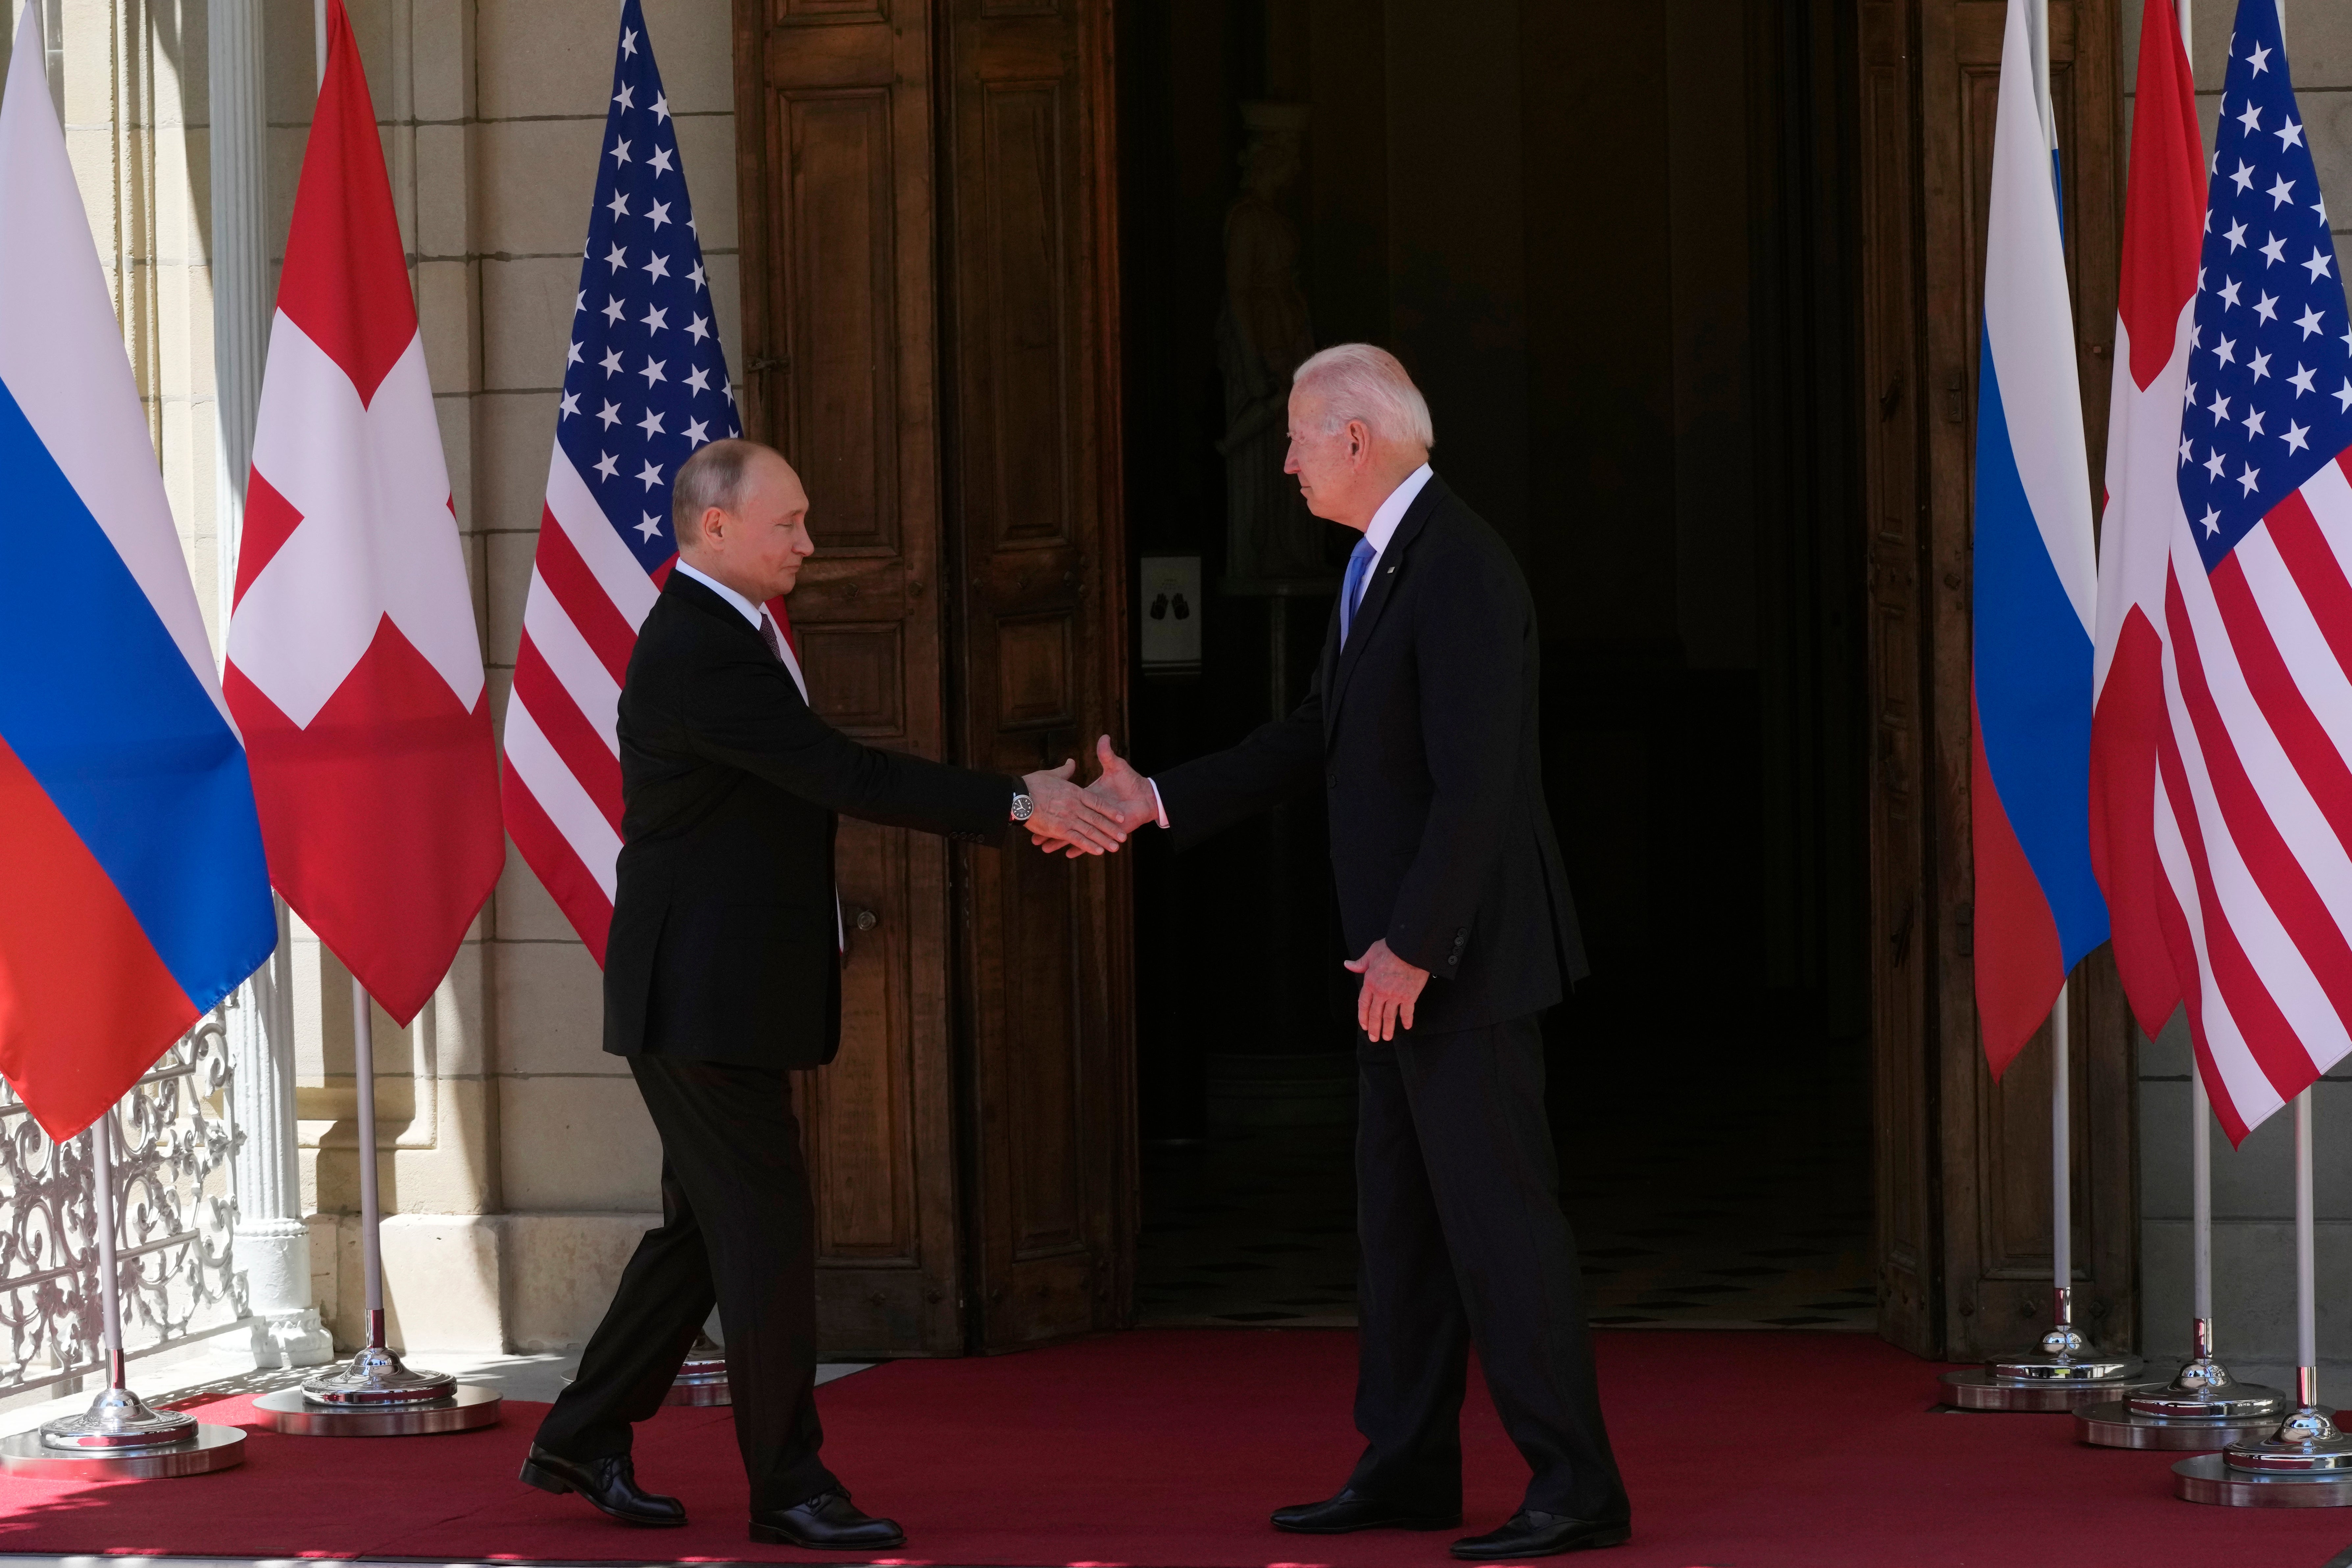 Russian President Vladimir Putin, left, and U.S President Joe Biden shake hands during their meeting at the ‘Villa la Grange’ in Geneva on June 16